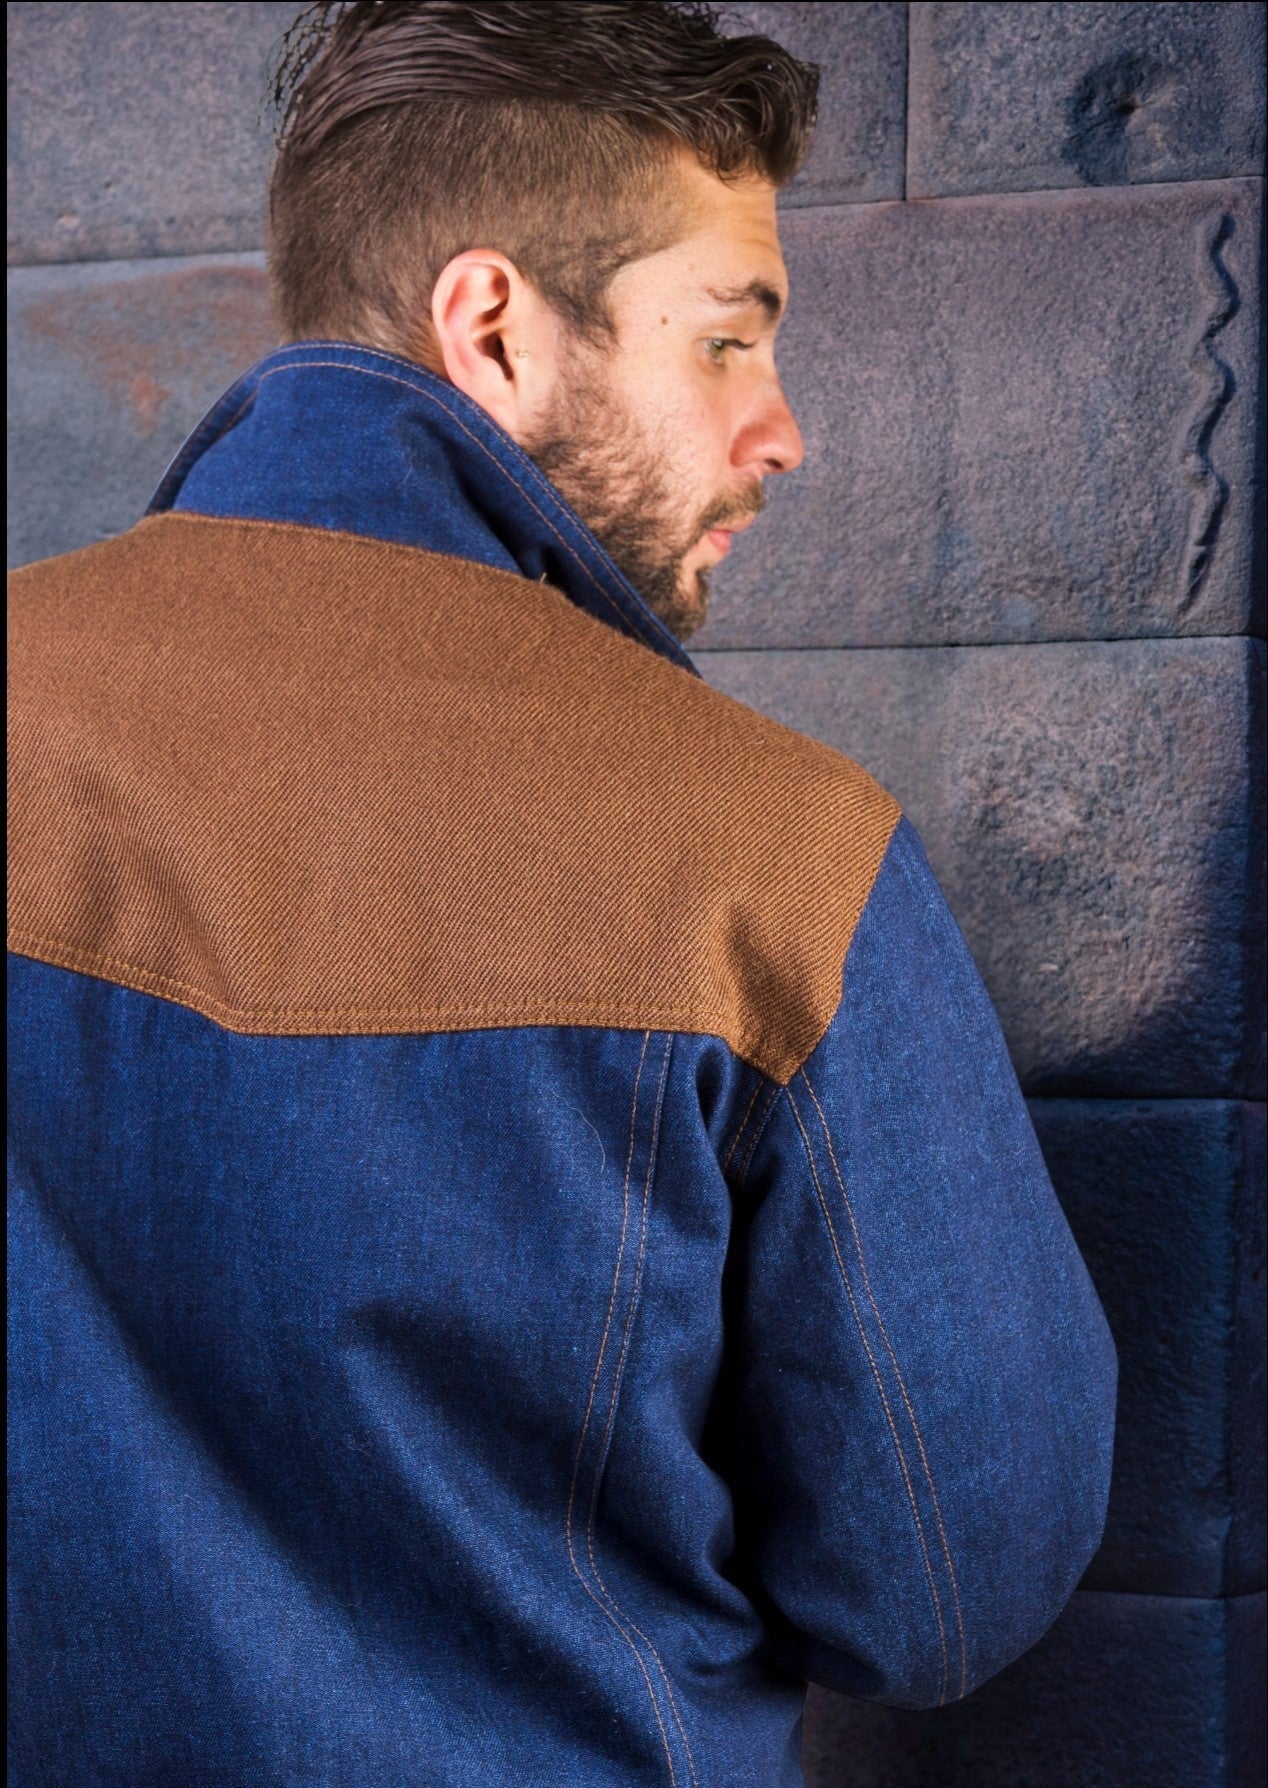 Denim jacket for men with elegant alpaca fabric application.